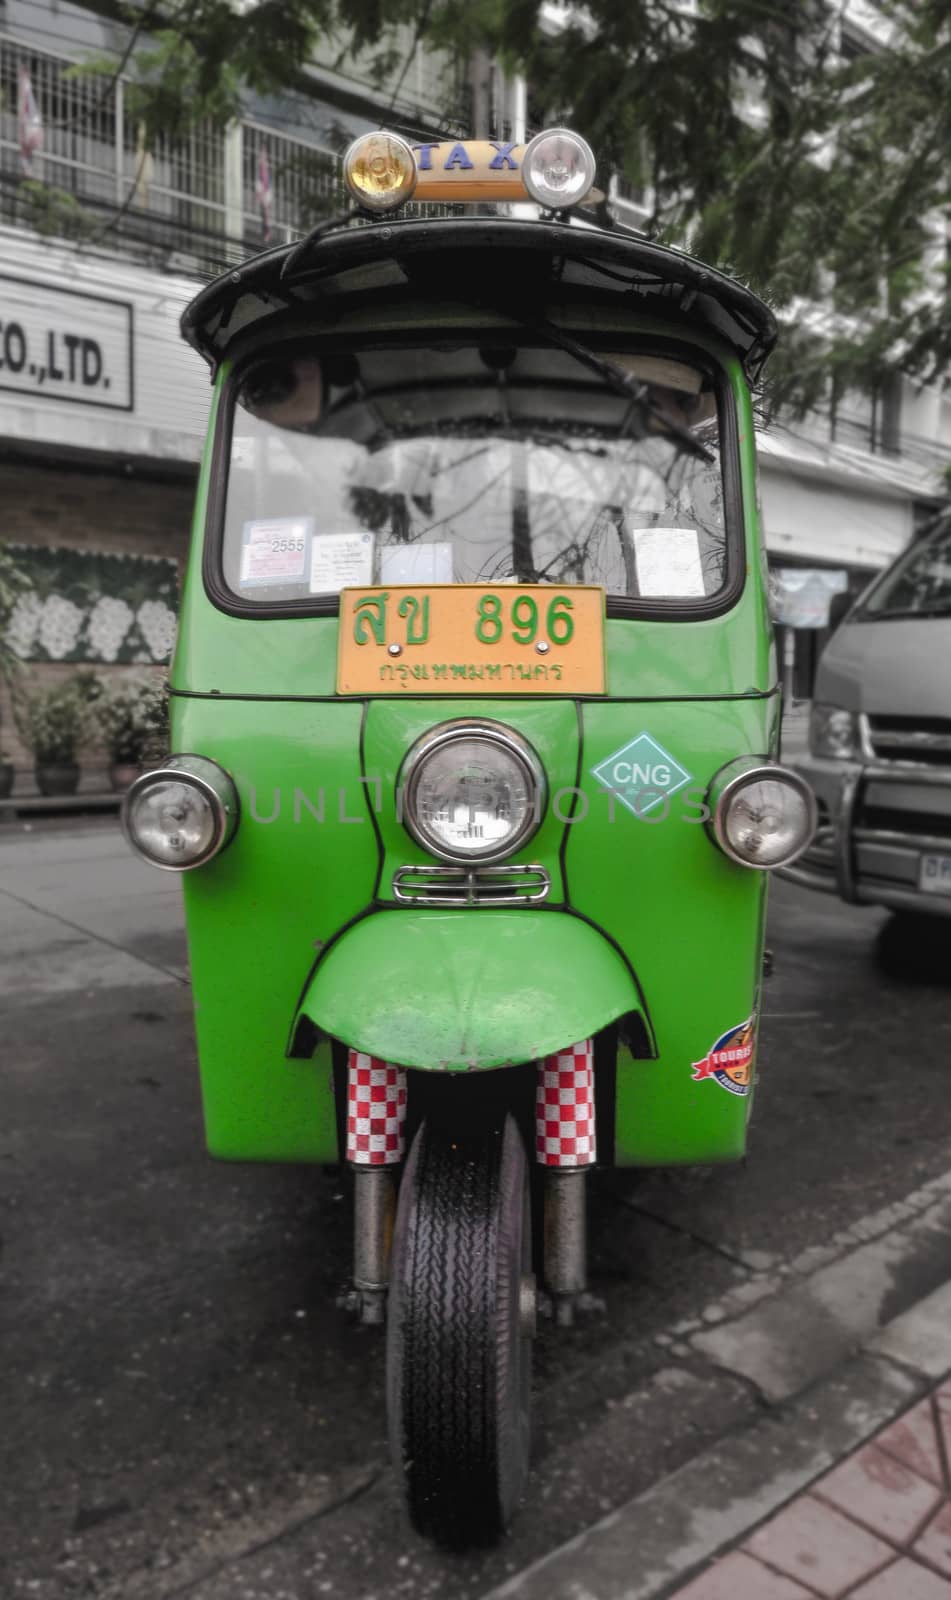 BANGKOK - JUNE 14: Tuk-tuk moto taxi on the street in the Chinat by weltreisendertj